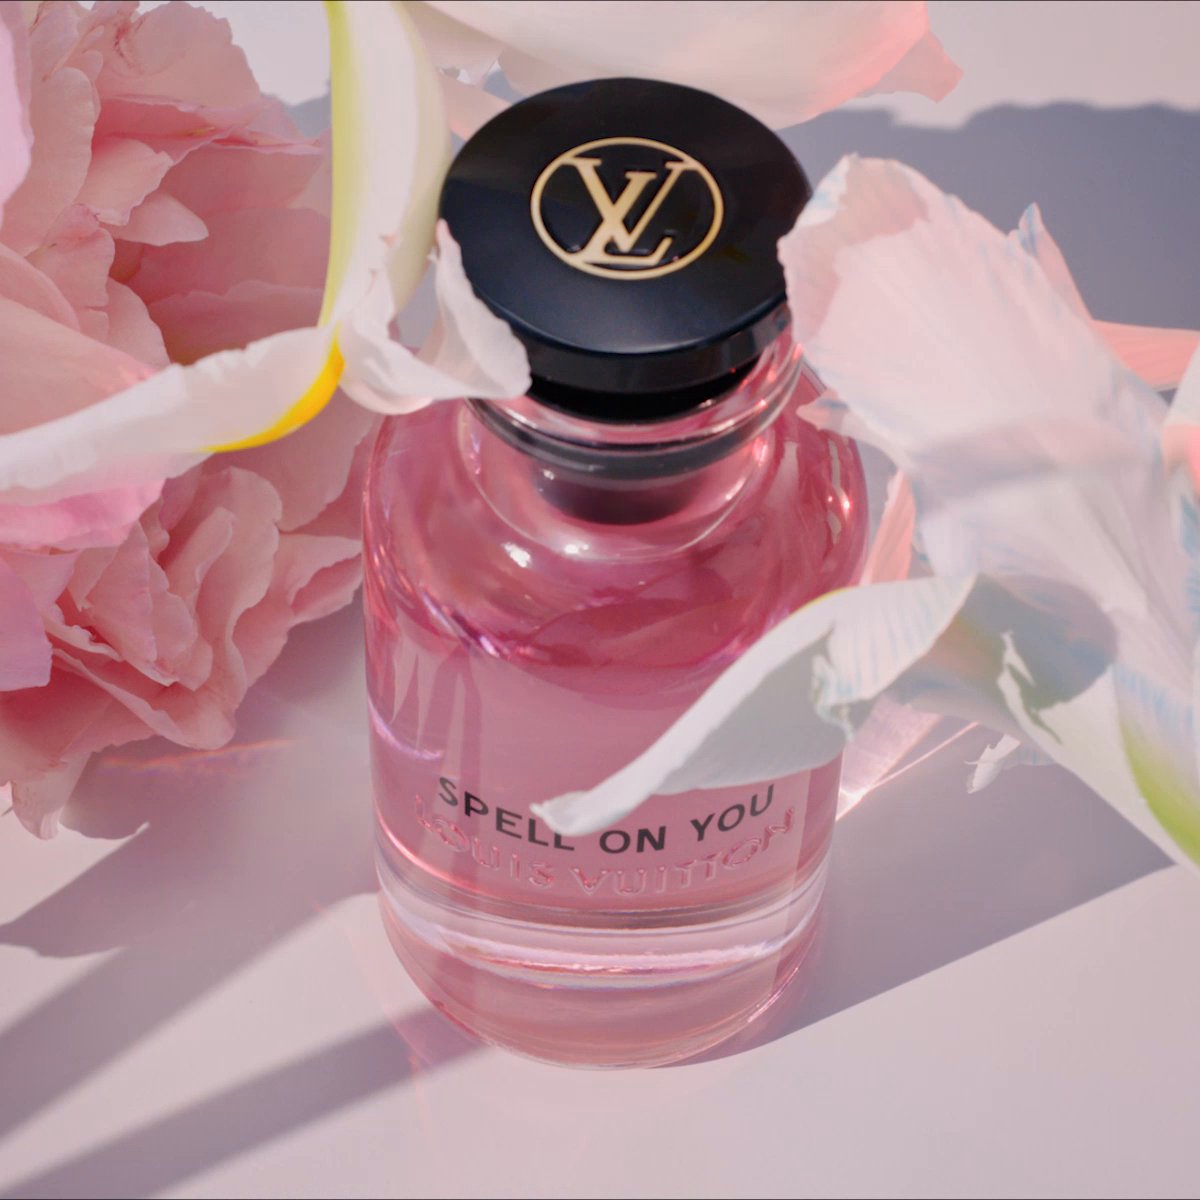 Louis Vuitton SPELL ON YOU  Louis vuitton perfume, Louis vuitton